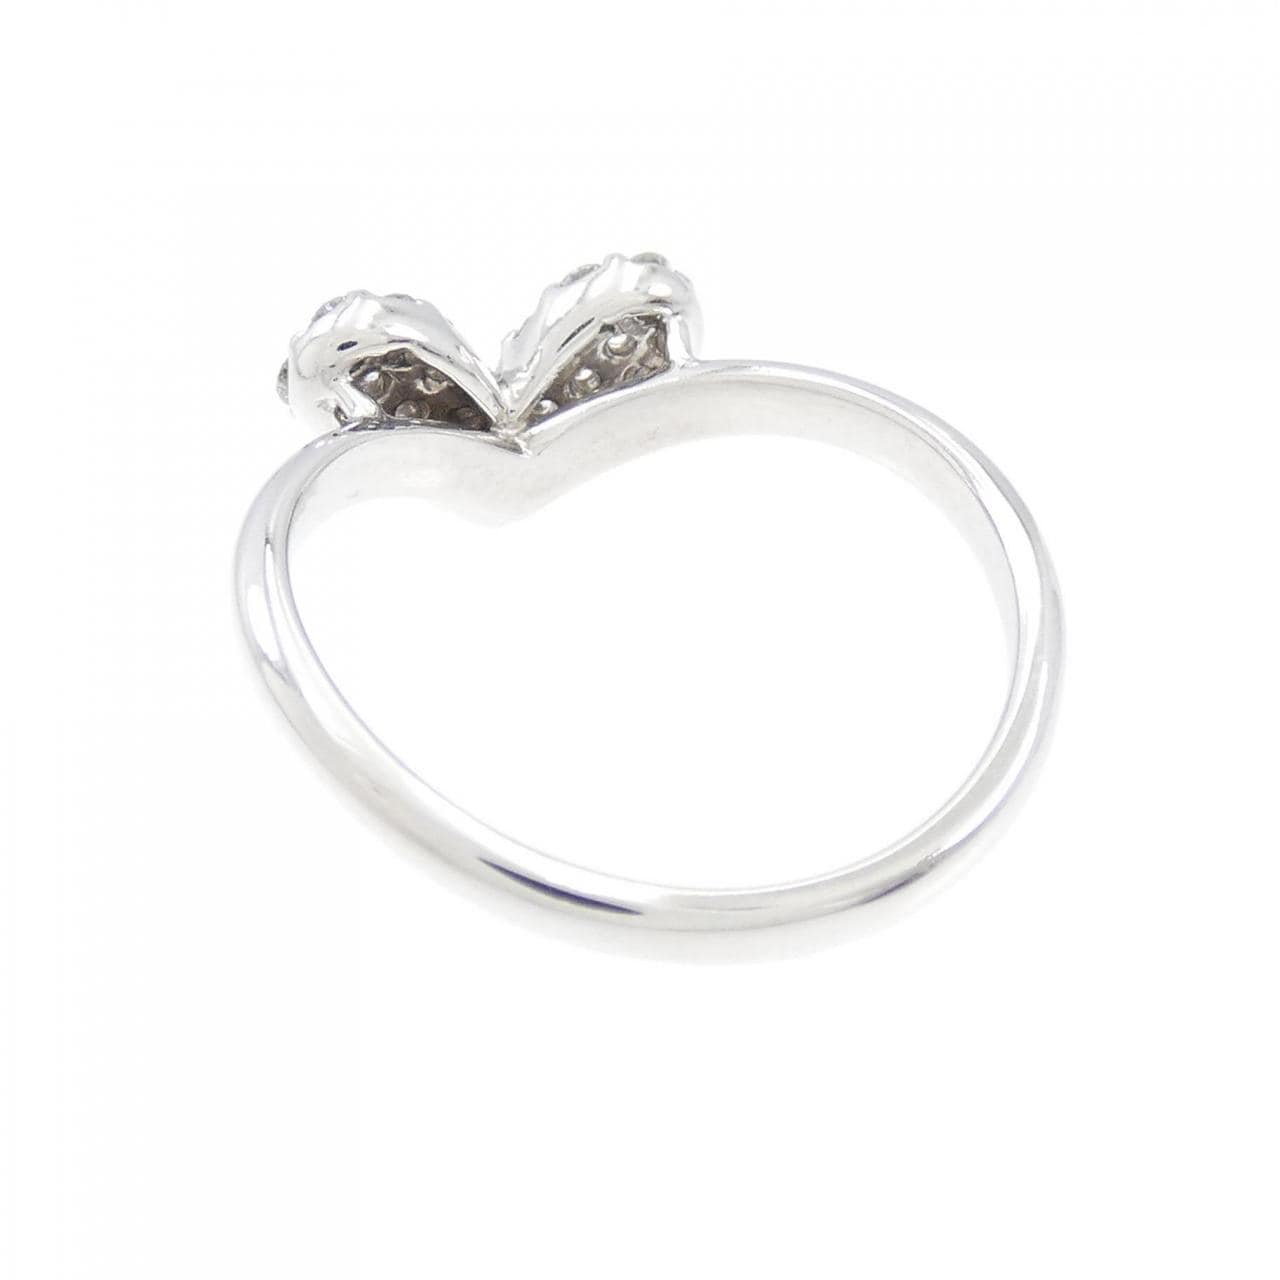 K18WG Pave Heart Diamond Ring 0.28CT